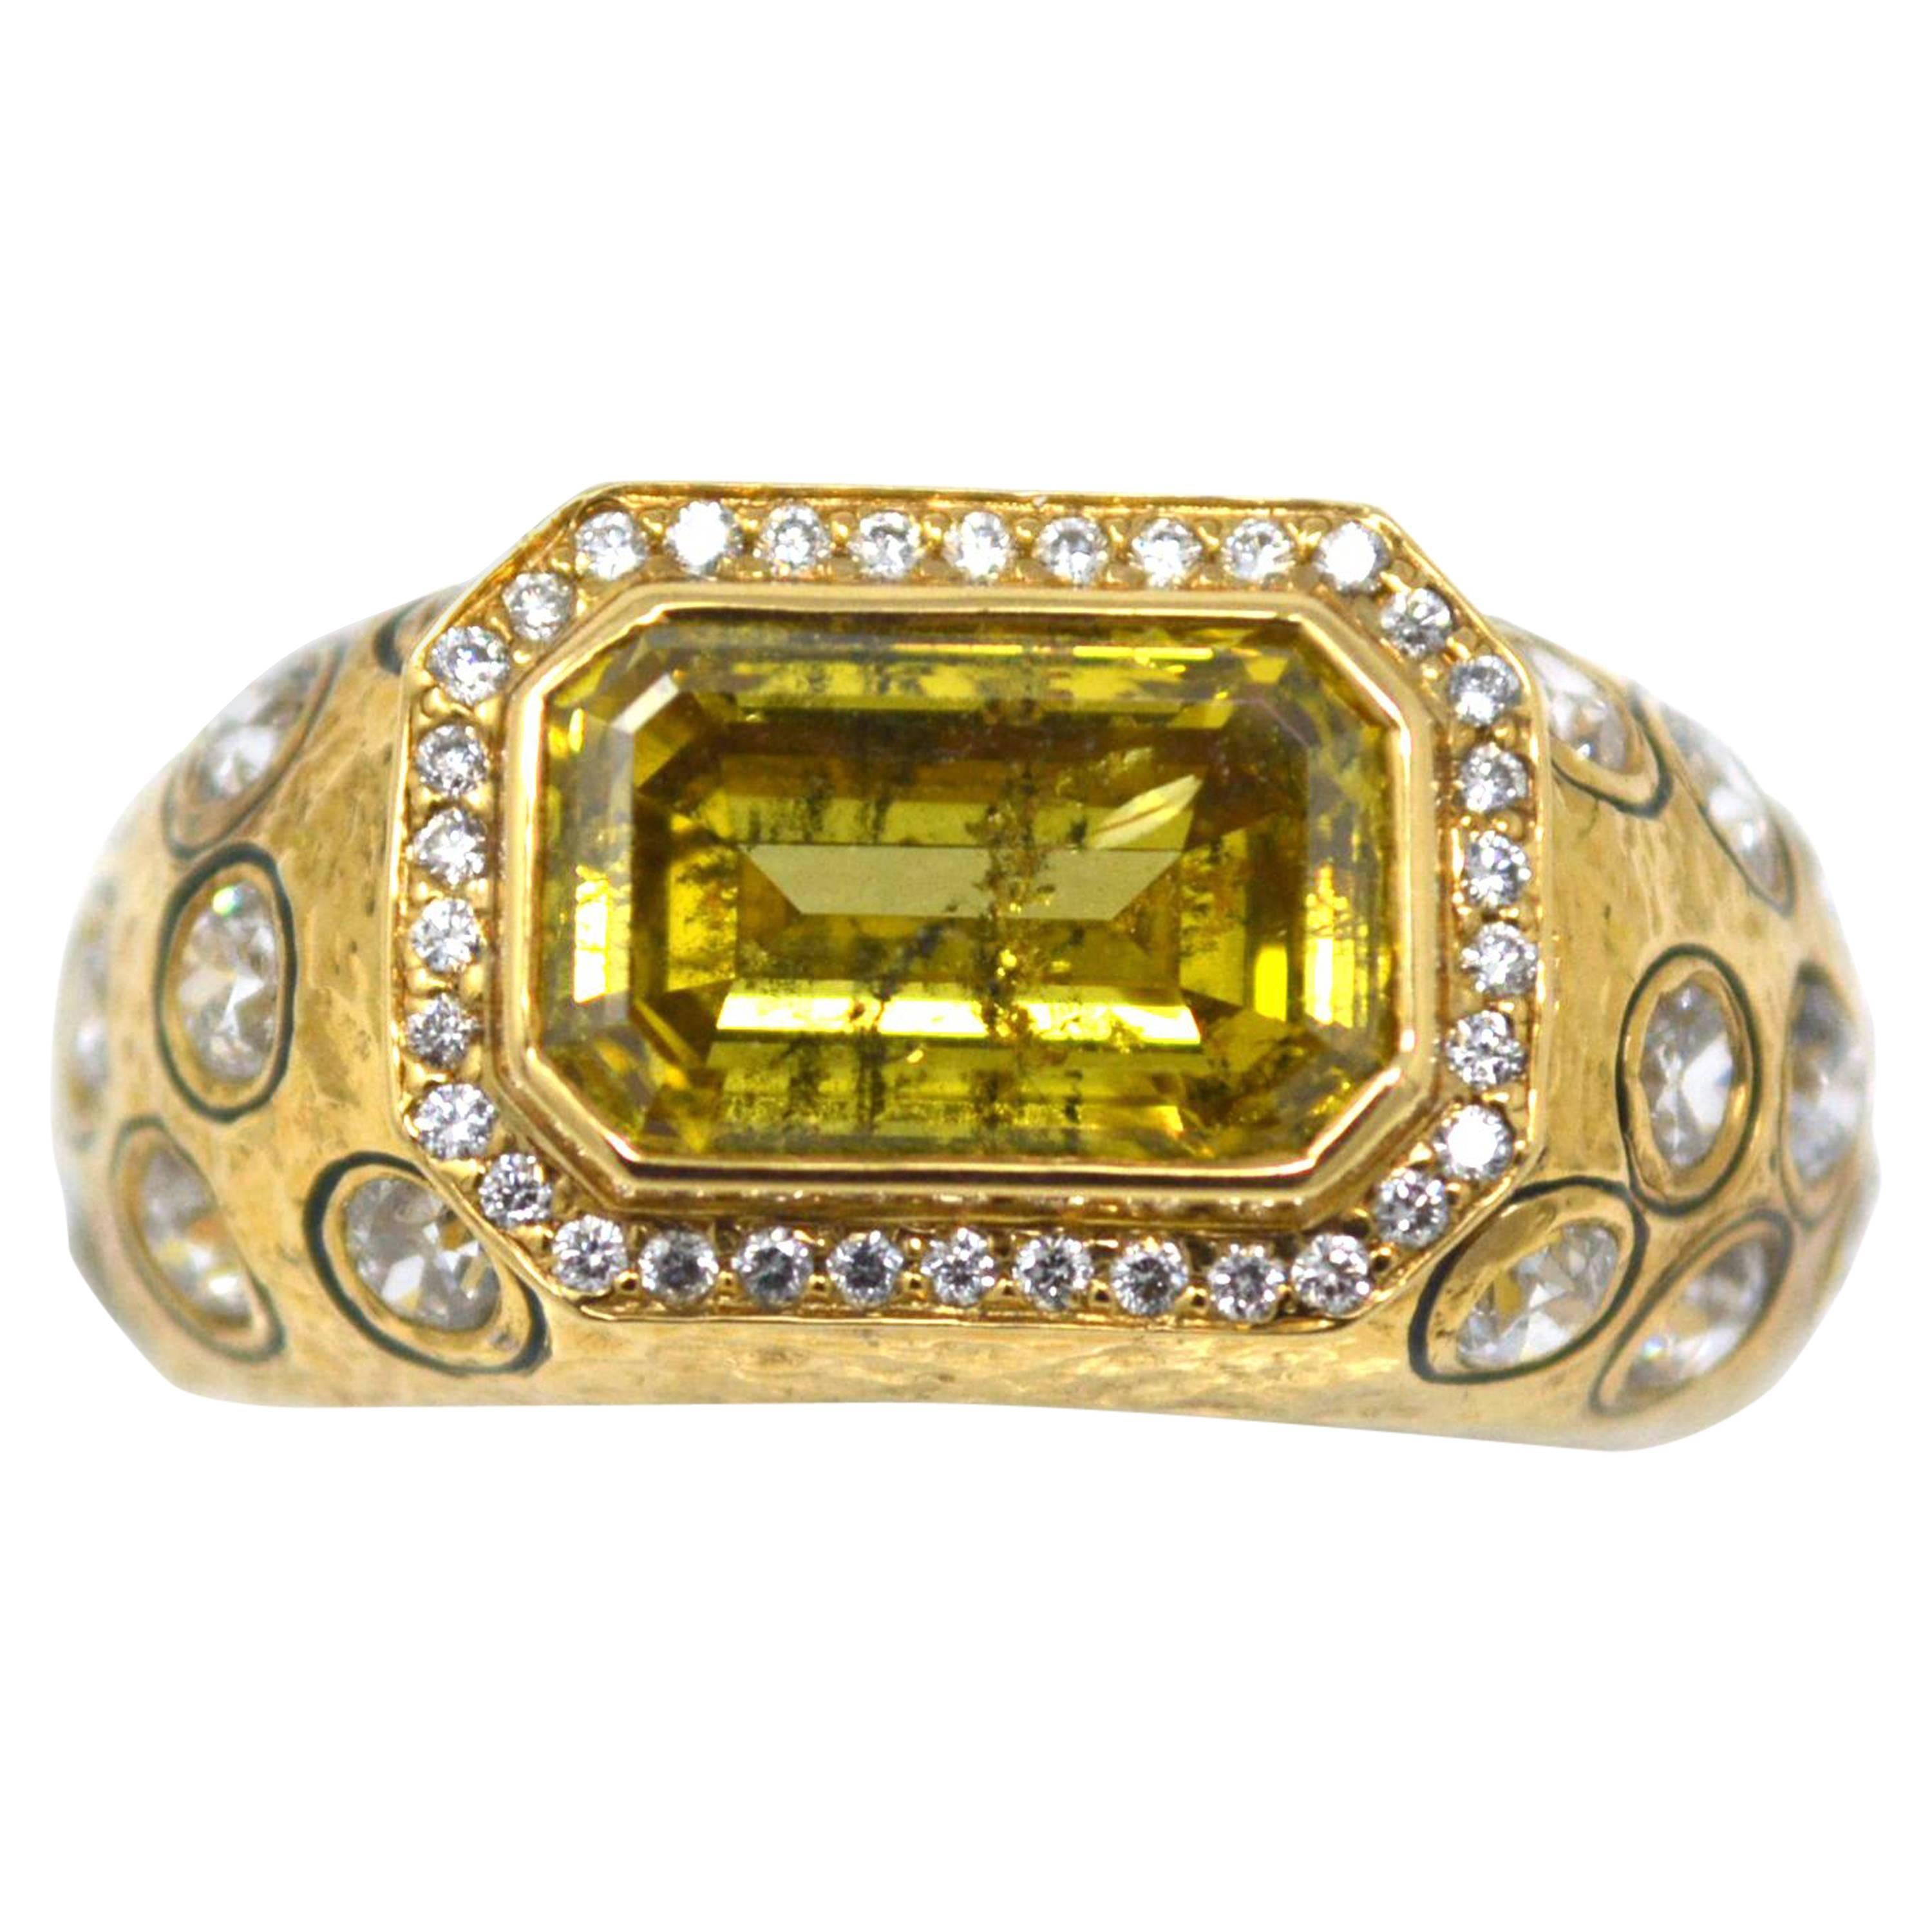 GIA Certified Unique Fancy Deep Brown Yellow Emerald Cut Diamond Ring